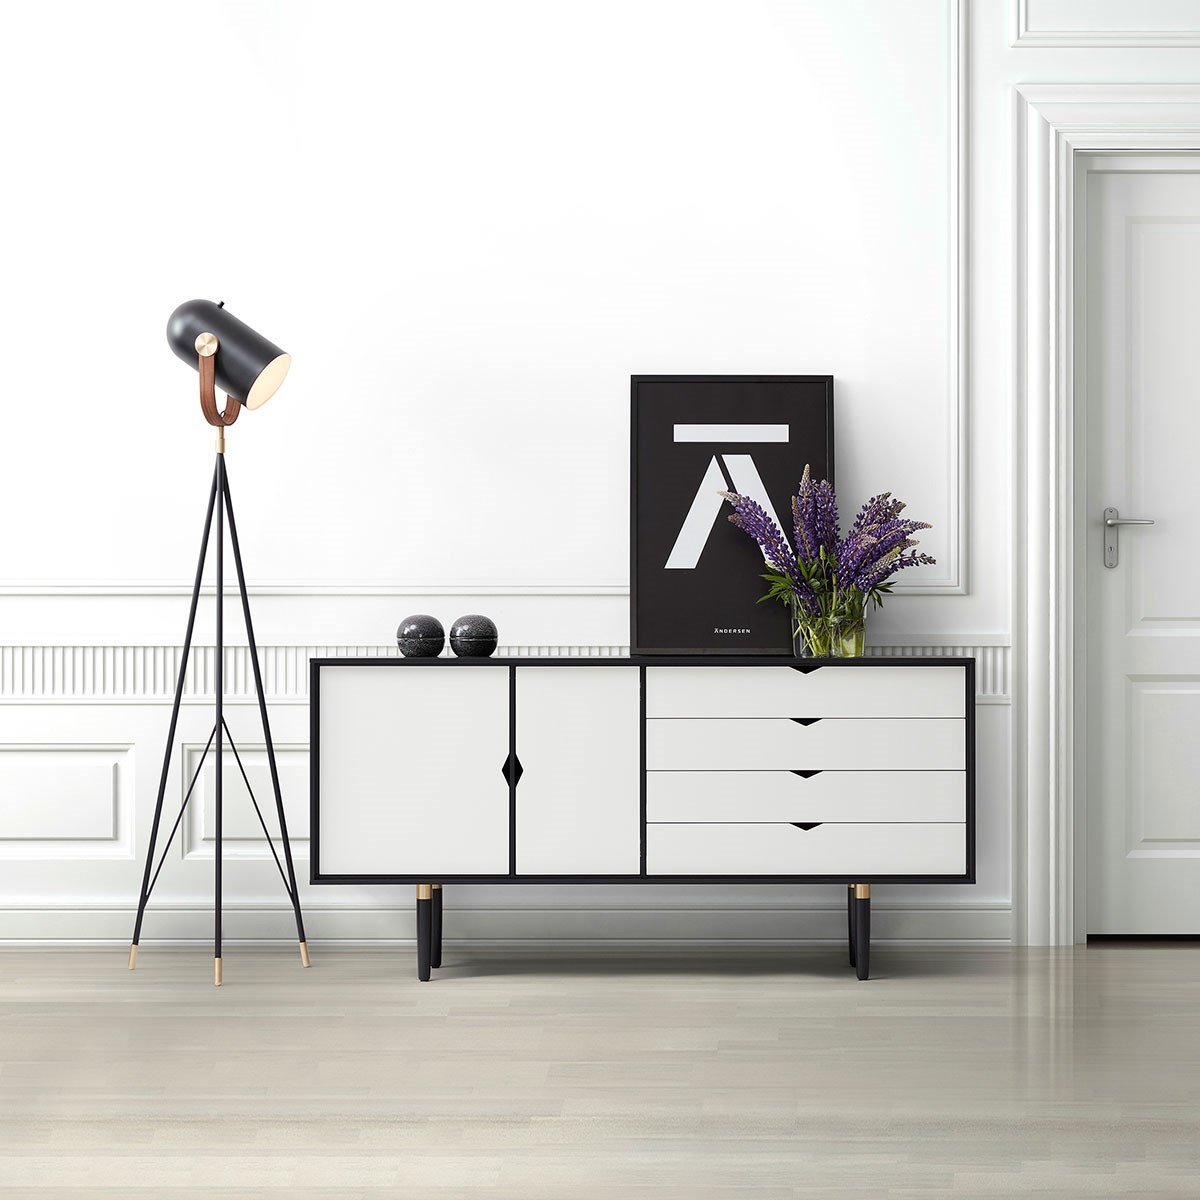 Andersen Furniture S6 Brozar negro, frente blanco